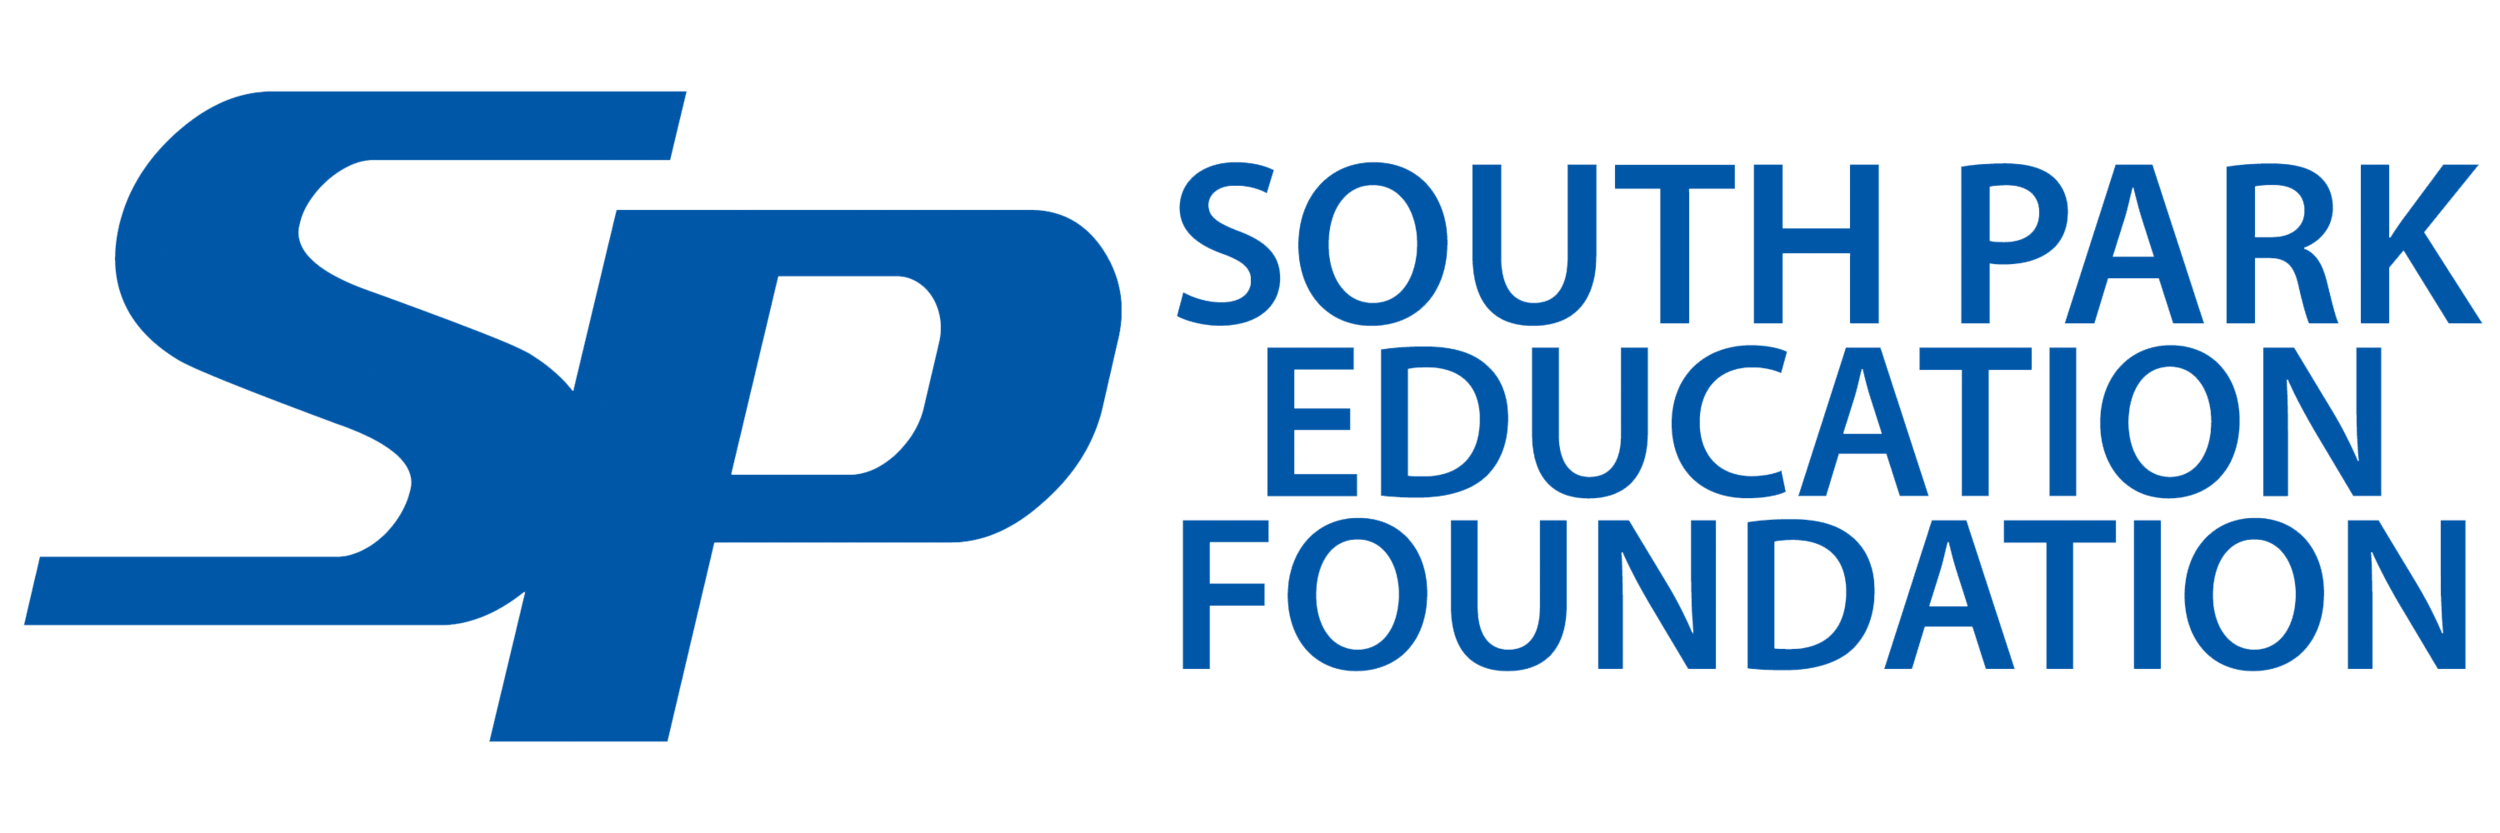 South Park Education Foundation logo.png